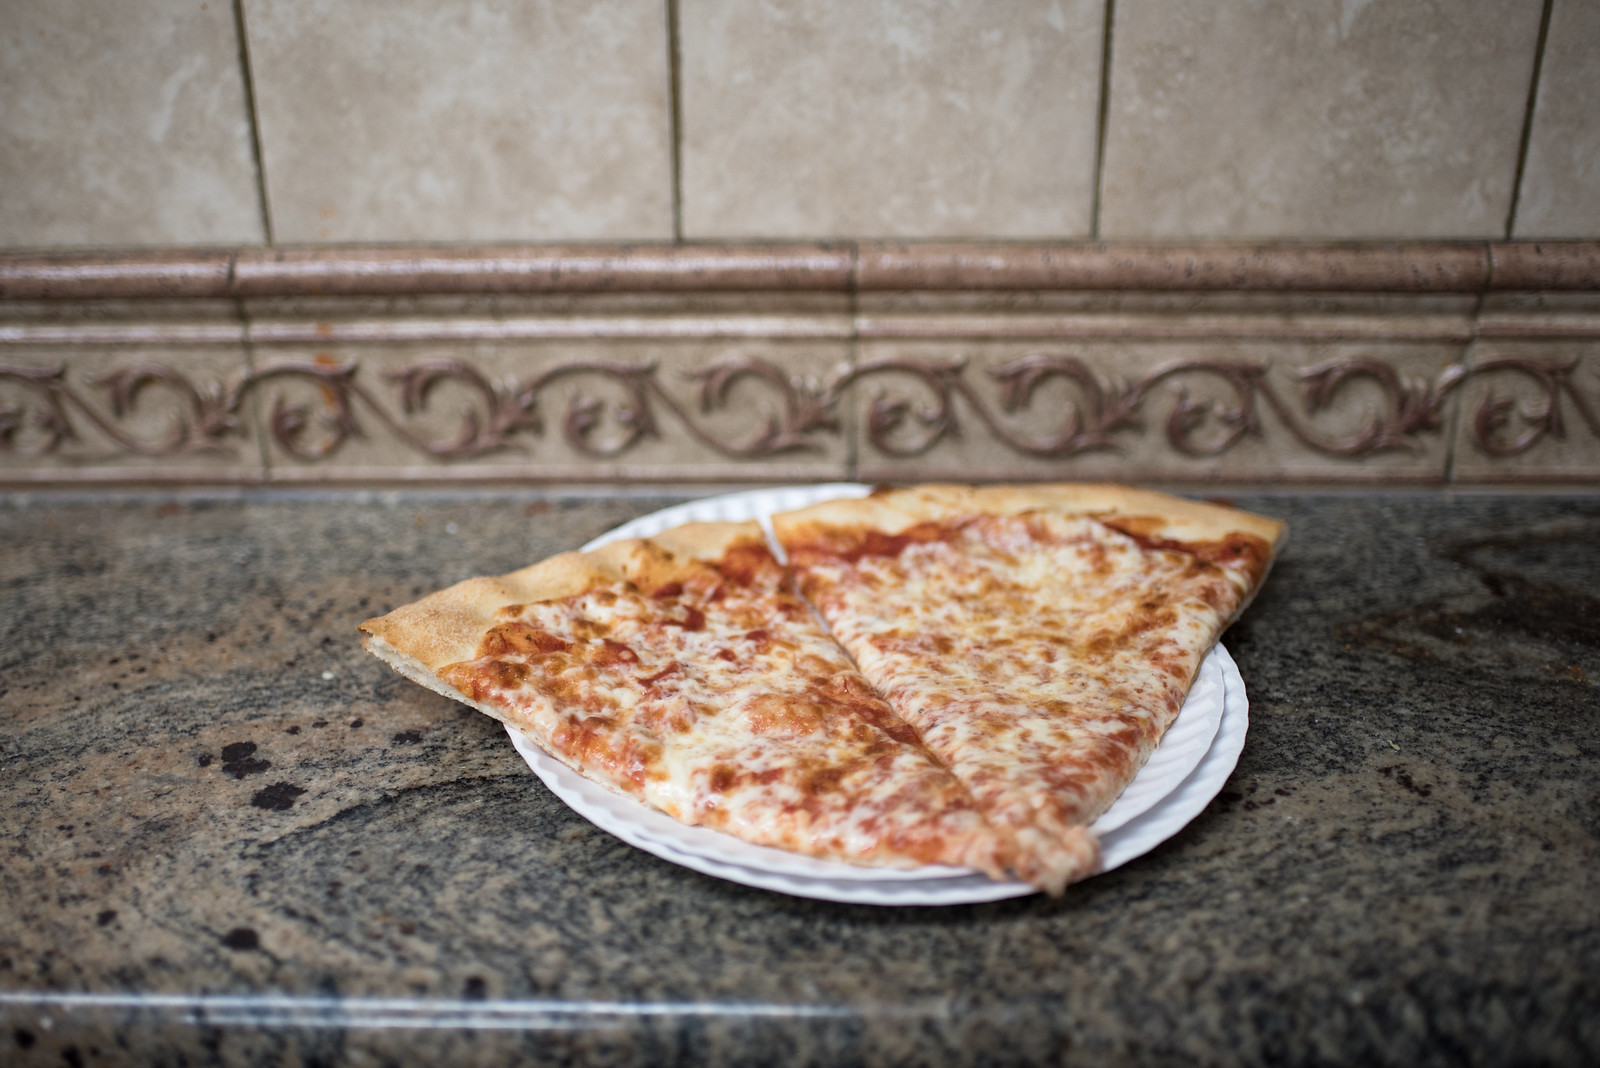 99 cent pizza in NYC on juliettelaura.blogspot.com